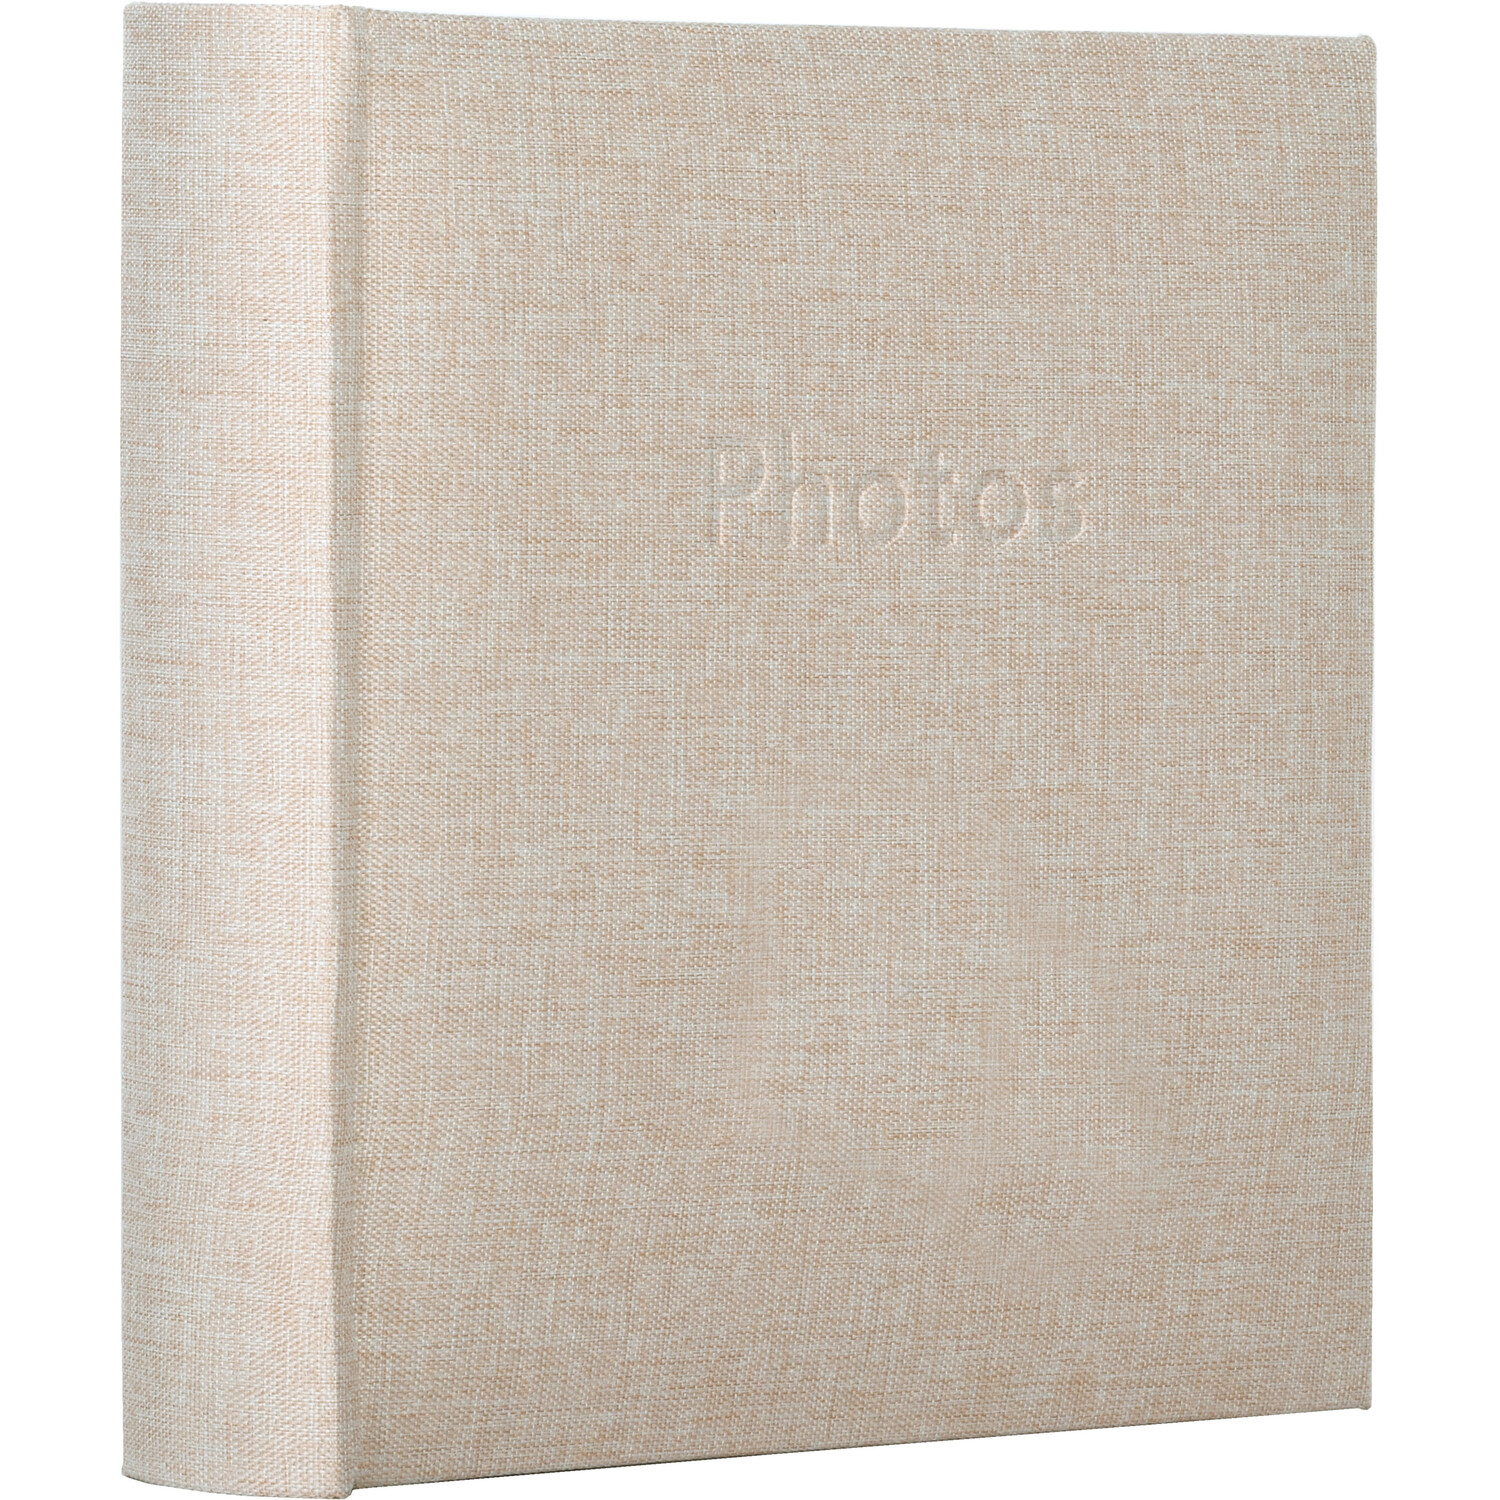 Single Linen Slip In 200 Photo Album in Assorted styles Image 4